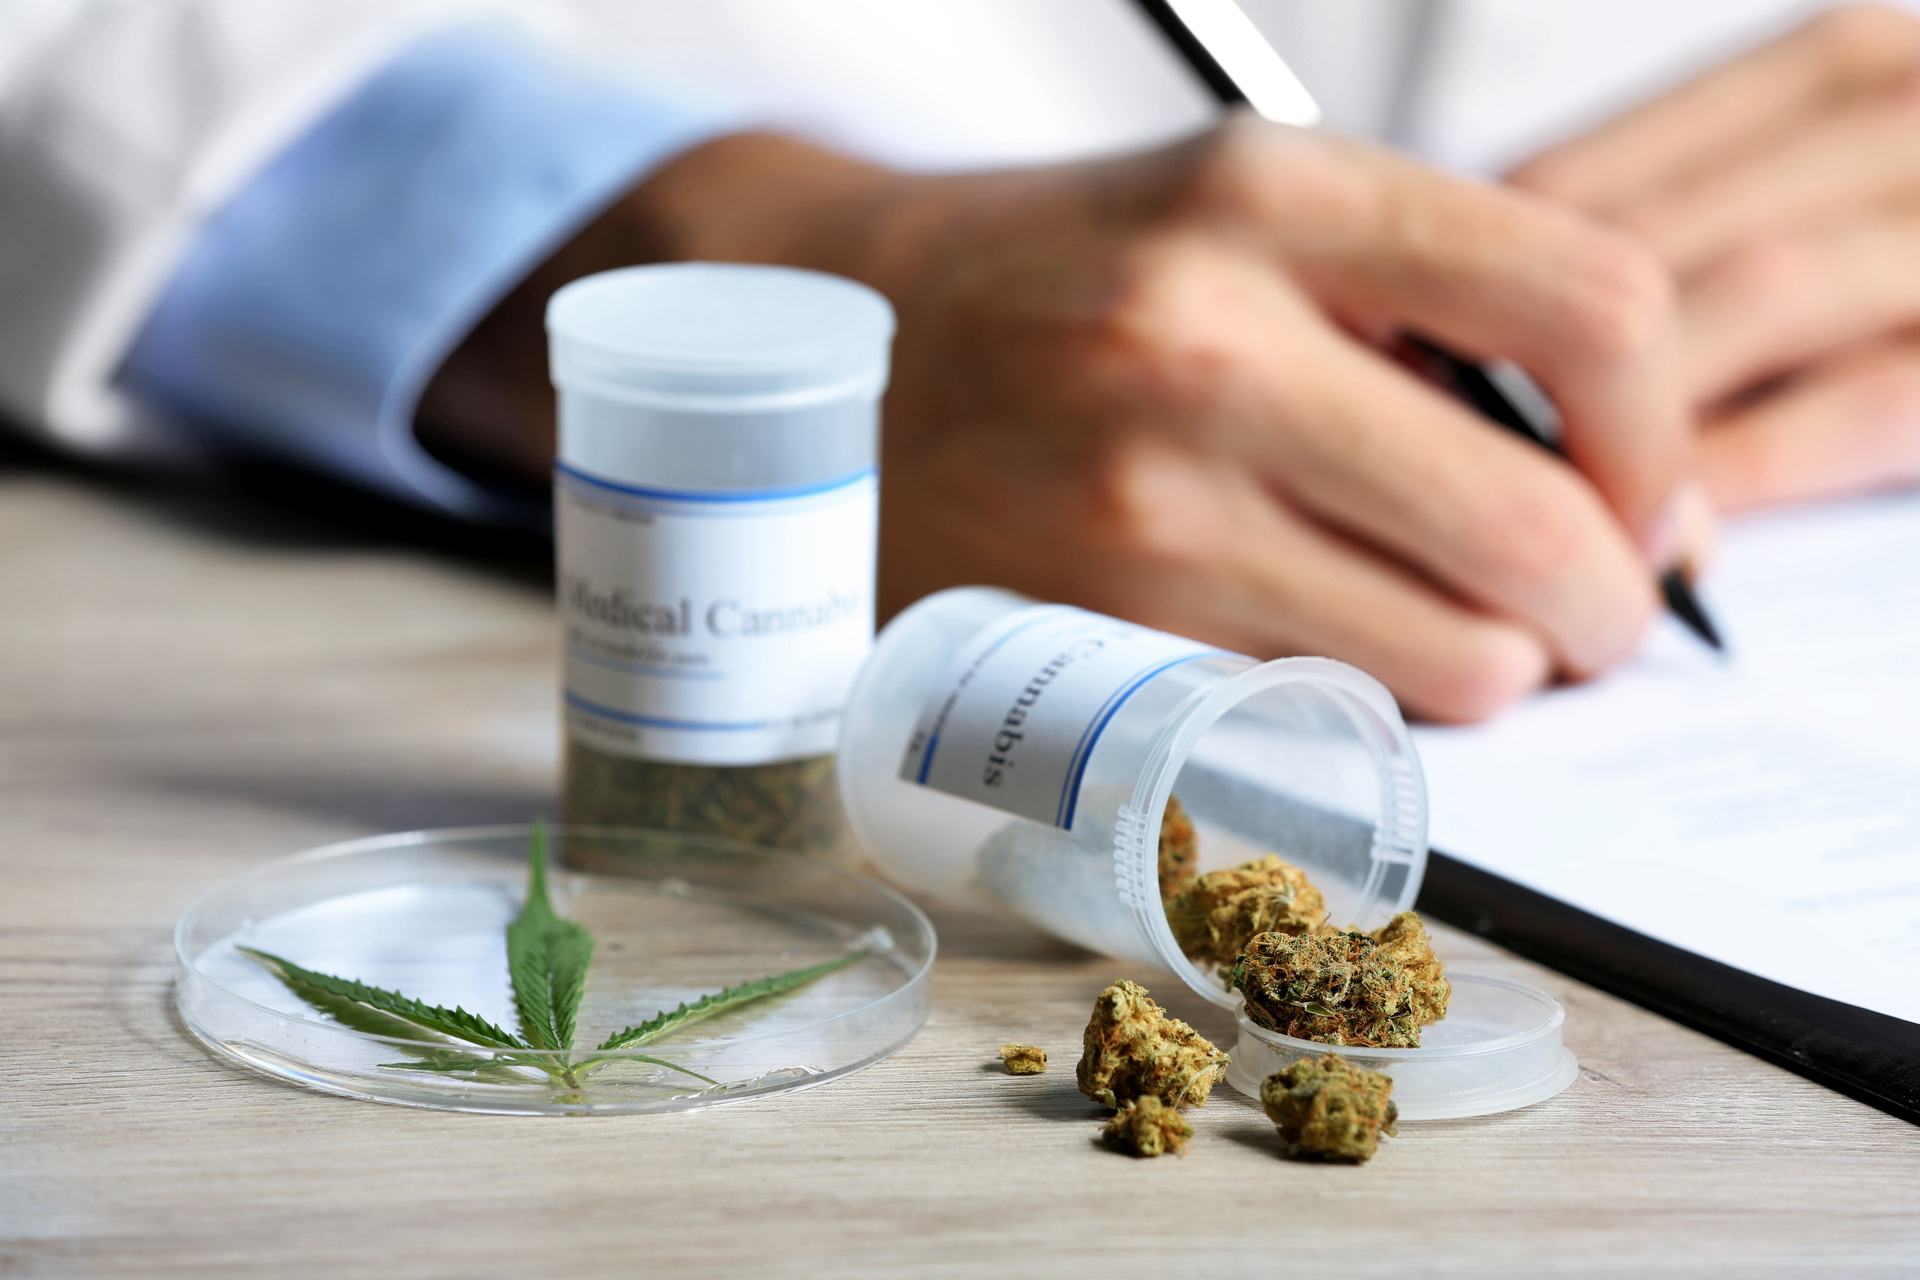 Medical cannabis and prescription bottle